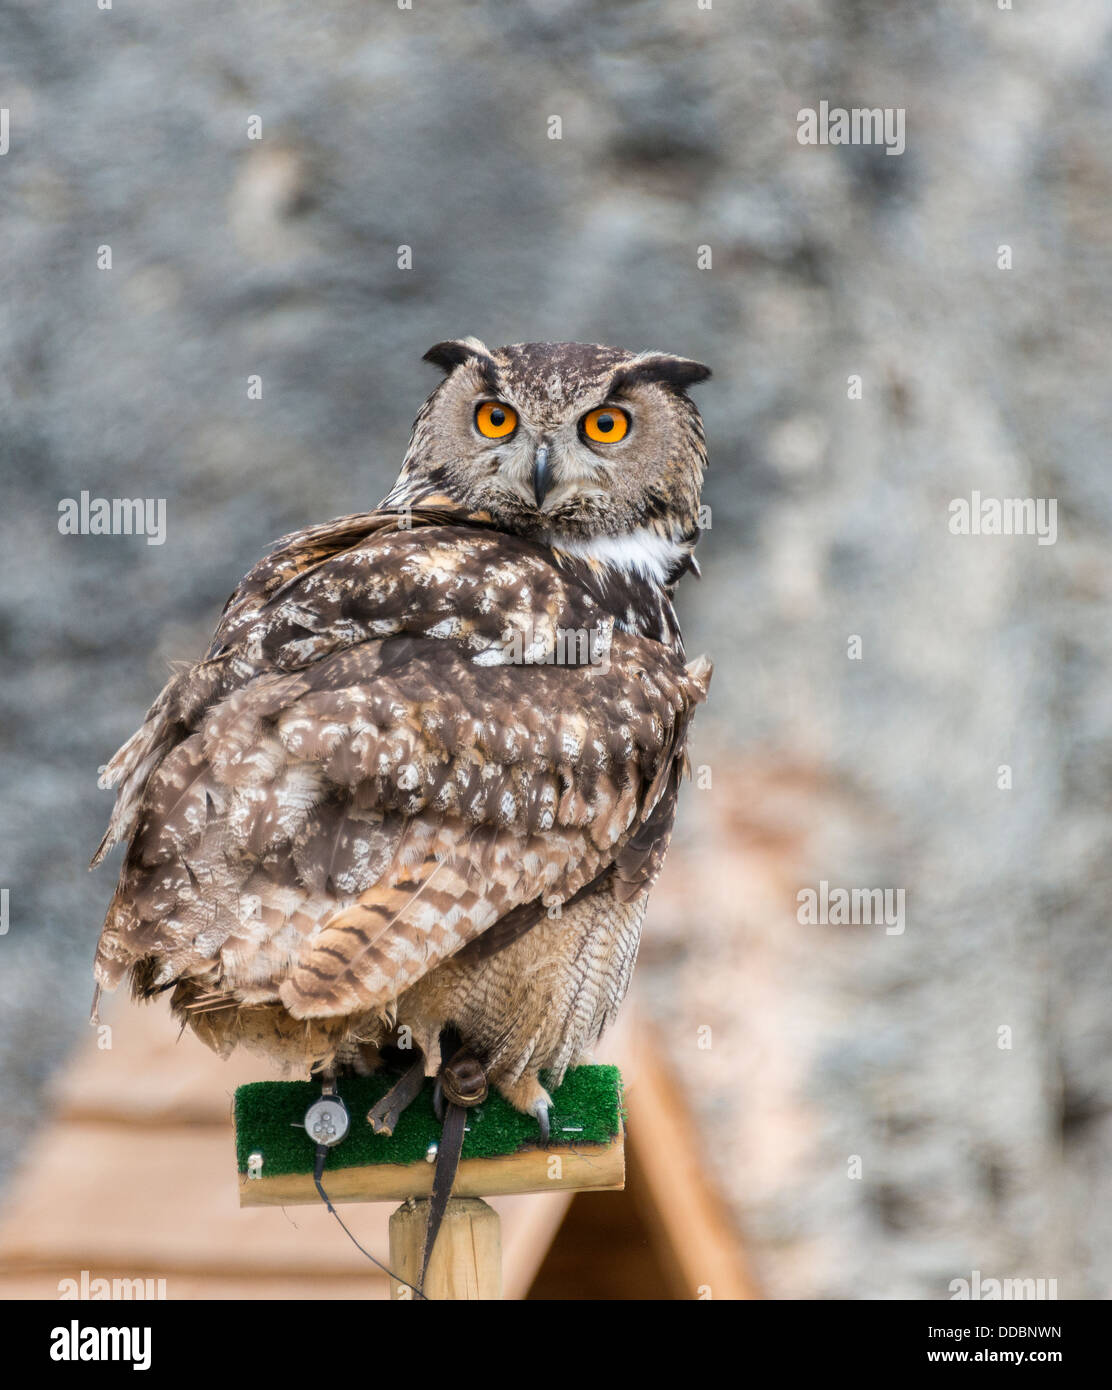 big owl with orange eyes looking at camera Stock Photo